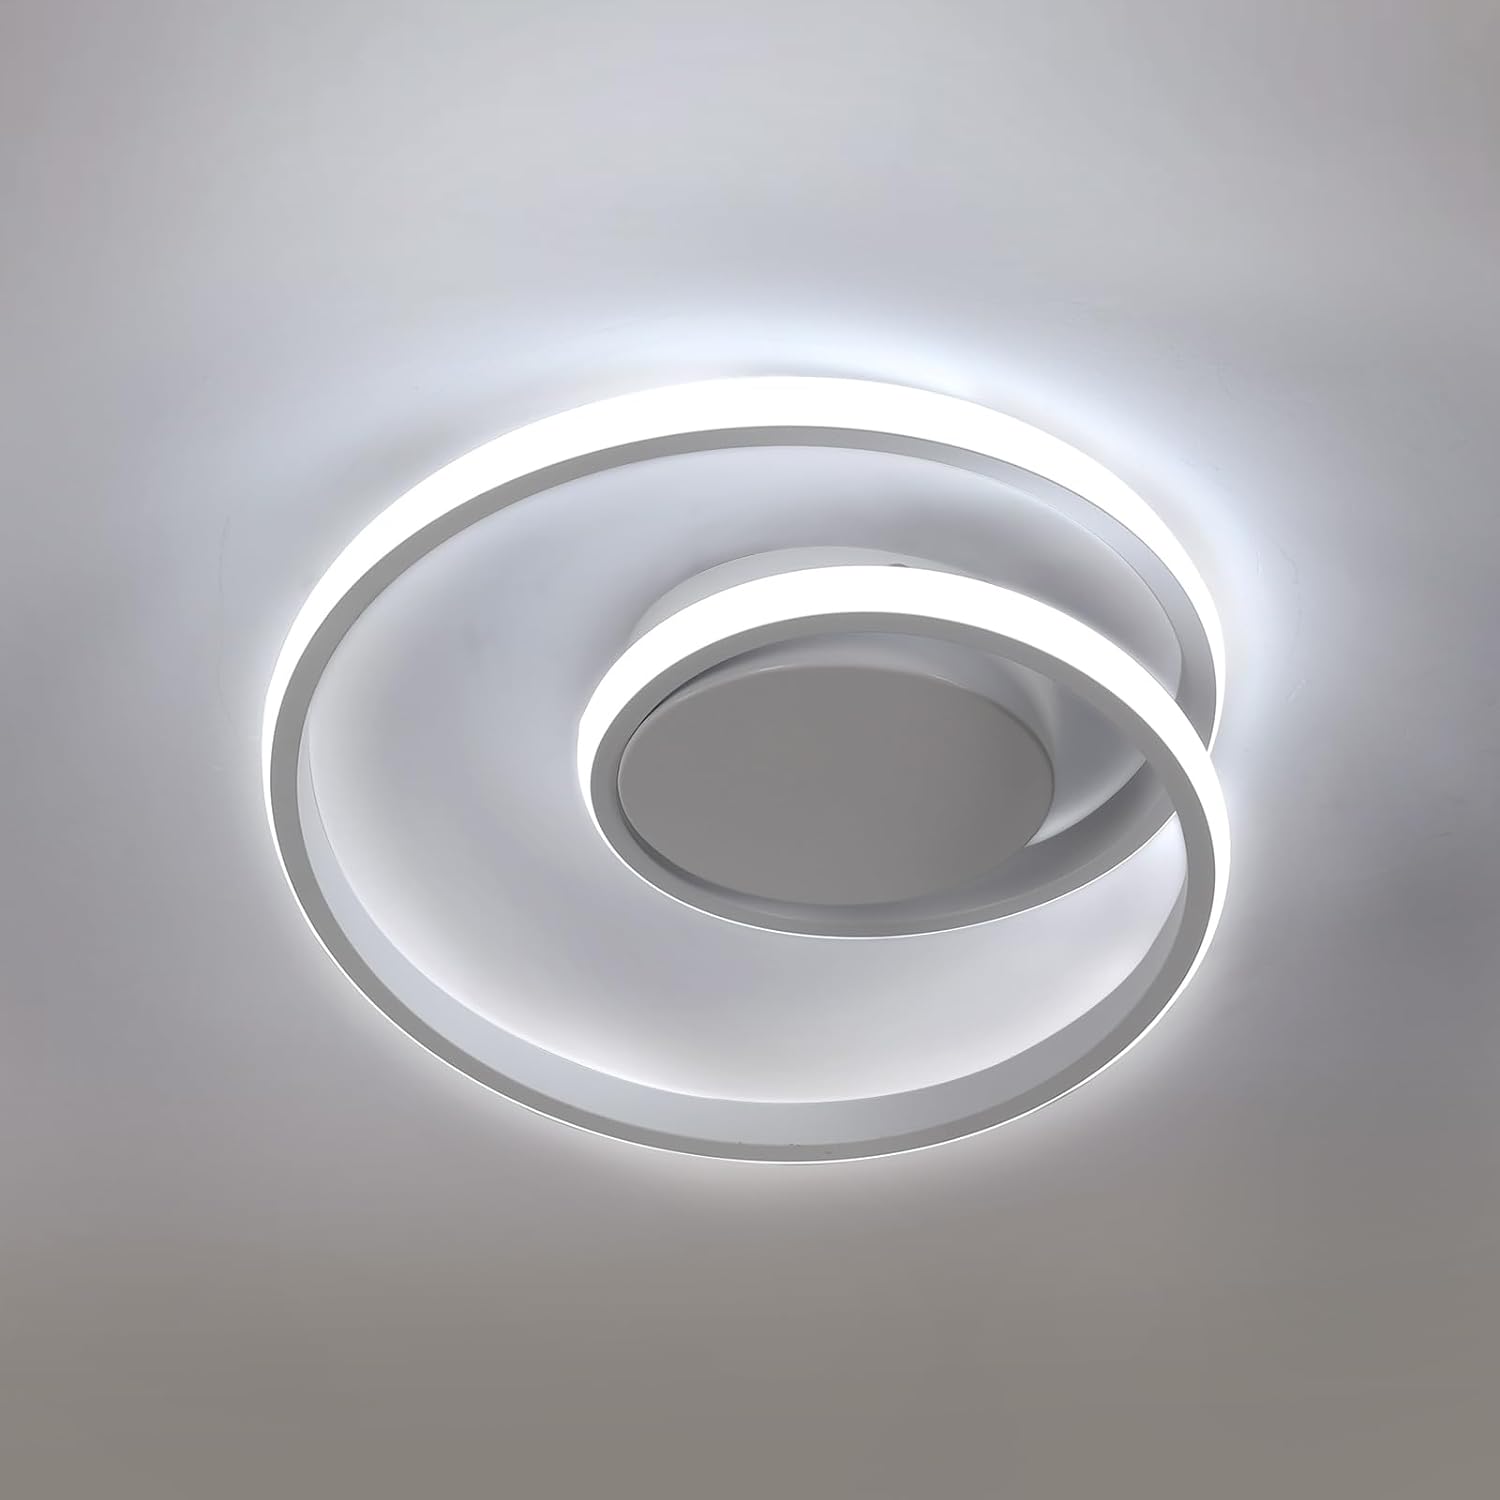 Luci a soffitto a LED, semplice lampada a soffitto moderna, diametro 30 cm  bianco 6500k, illuminazione bianca